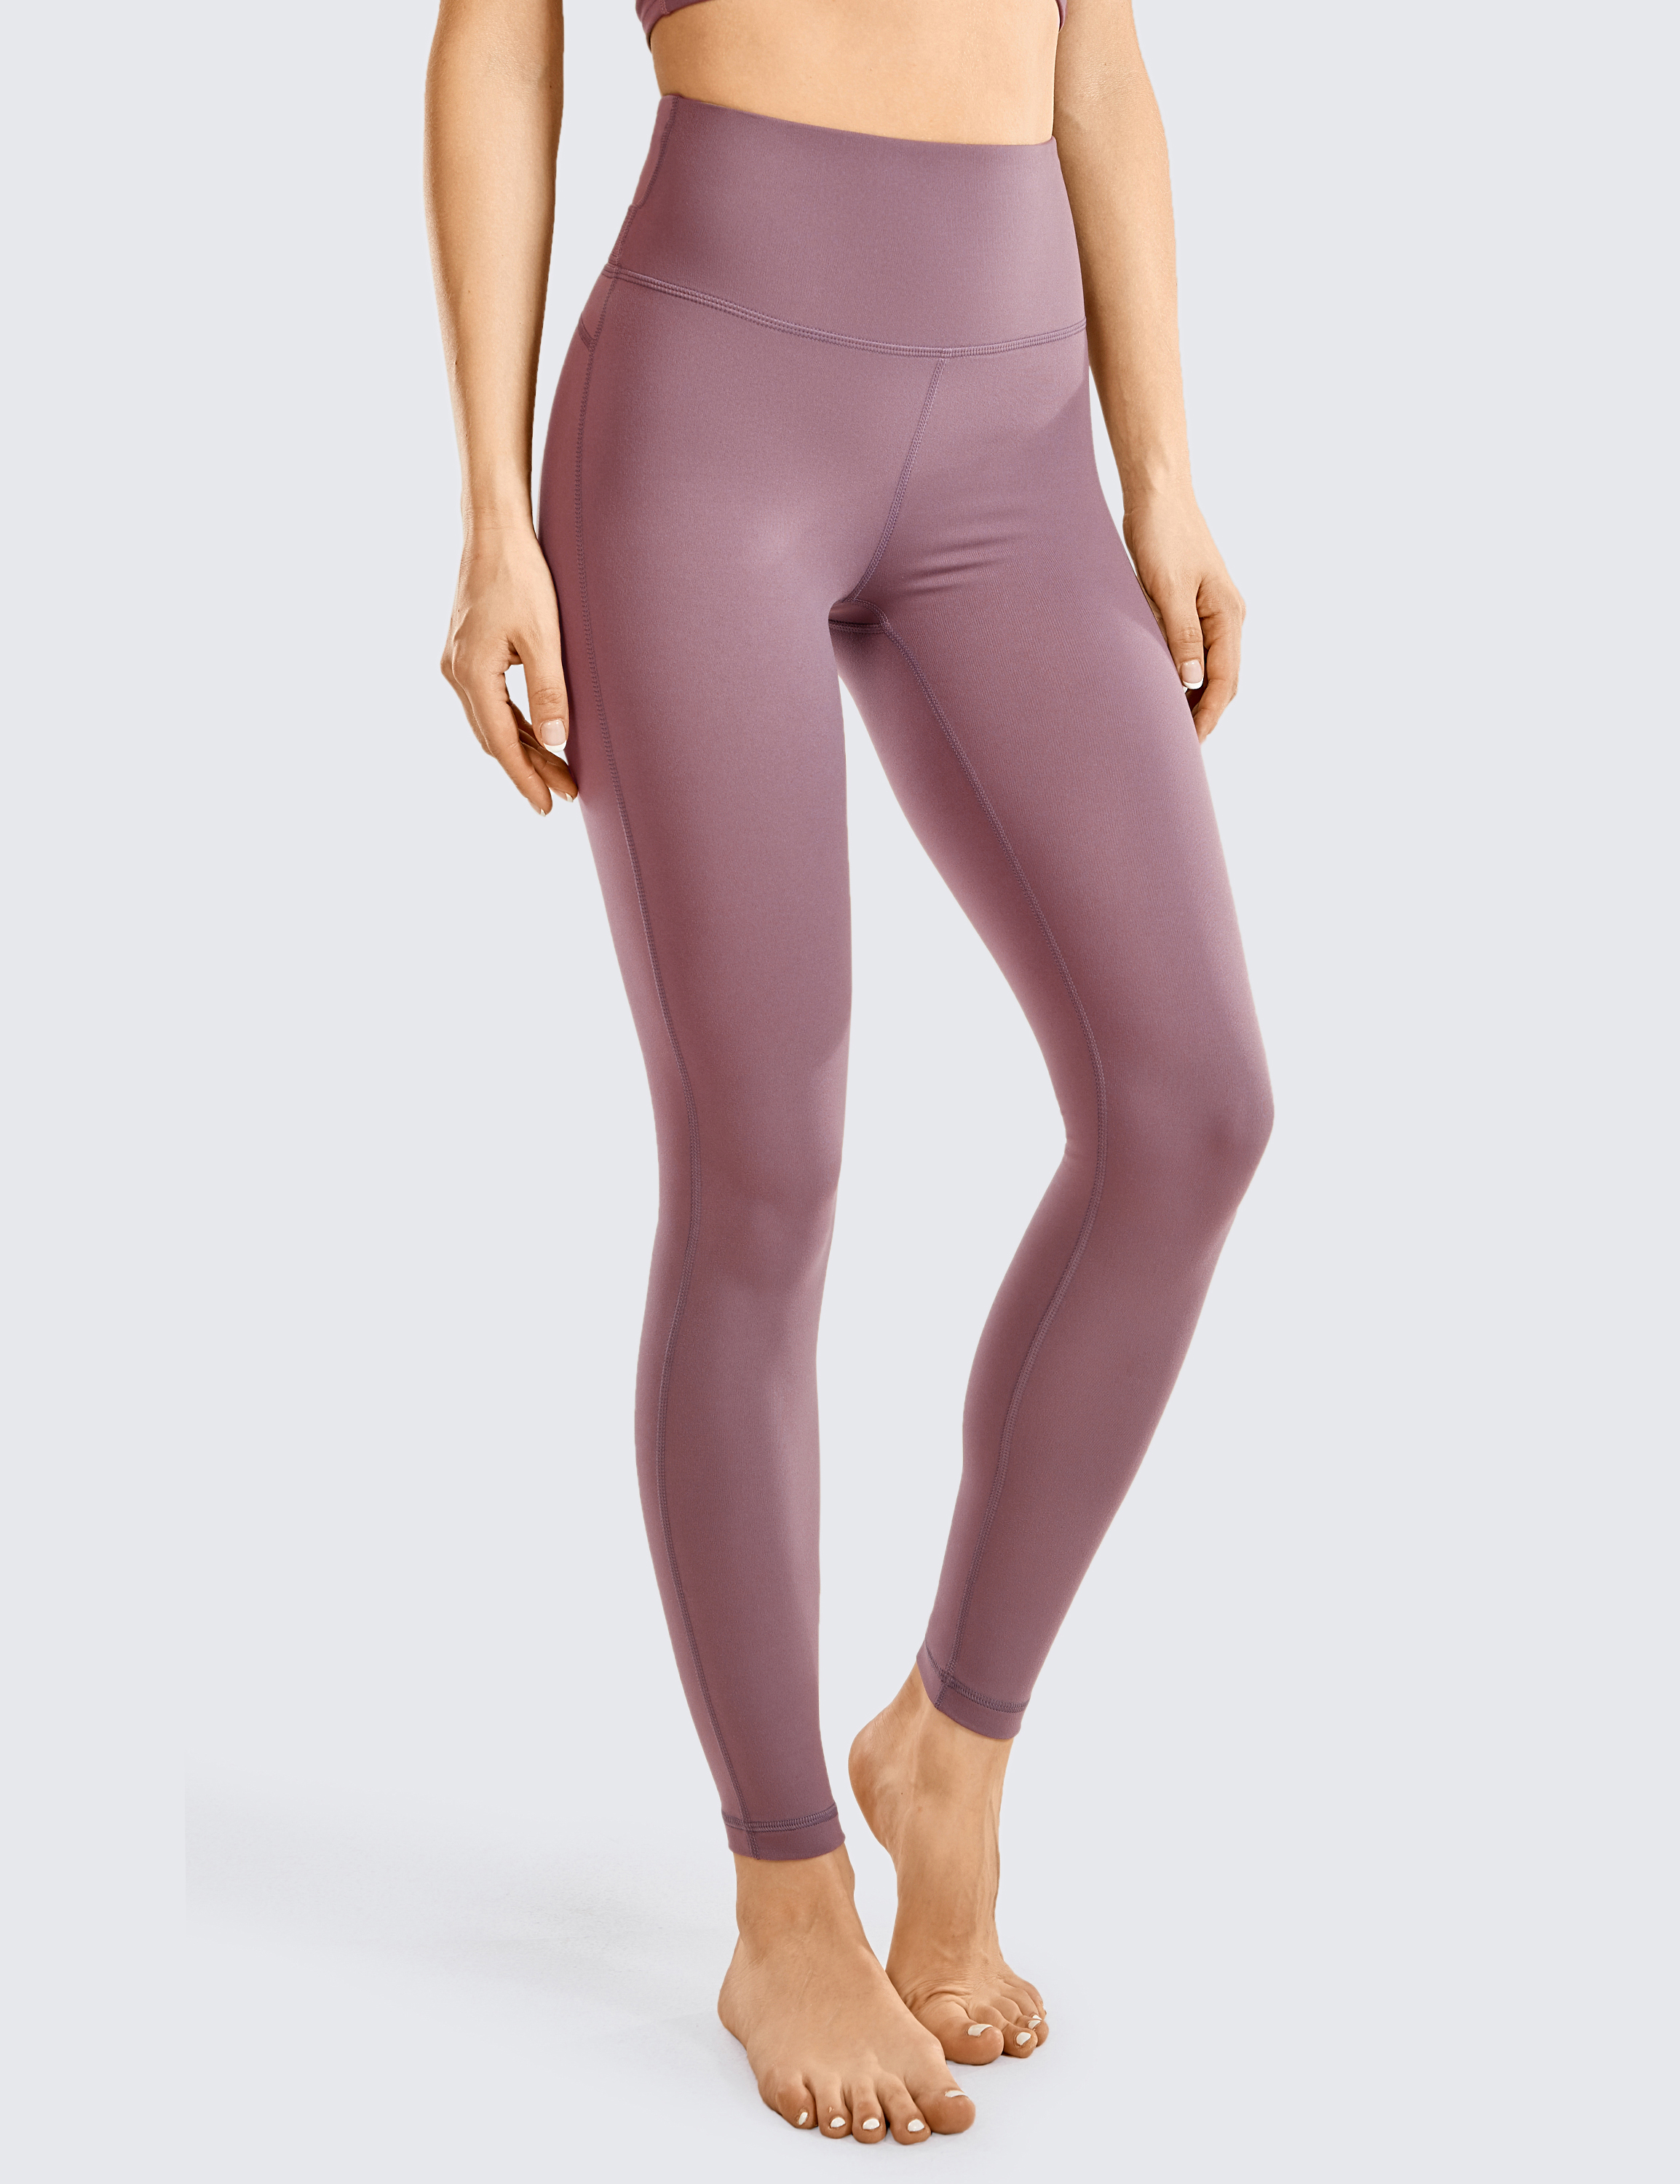 Mid Rise : Yoga Pants & Workout Leggings for Women : Target